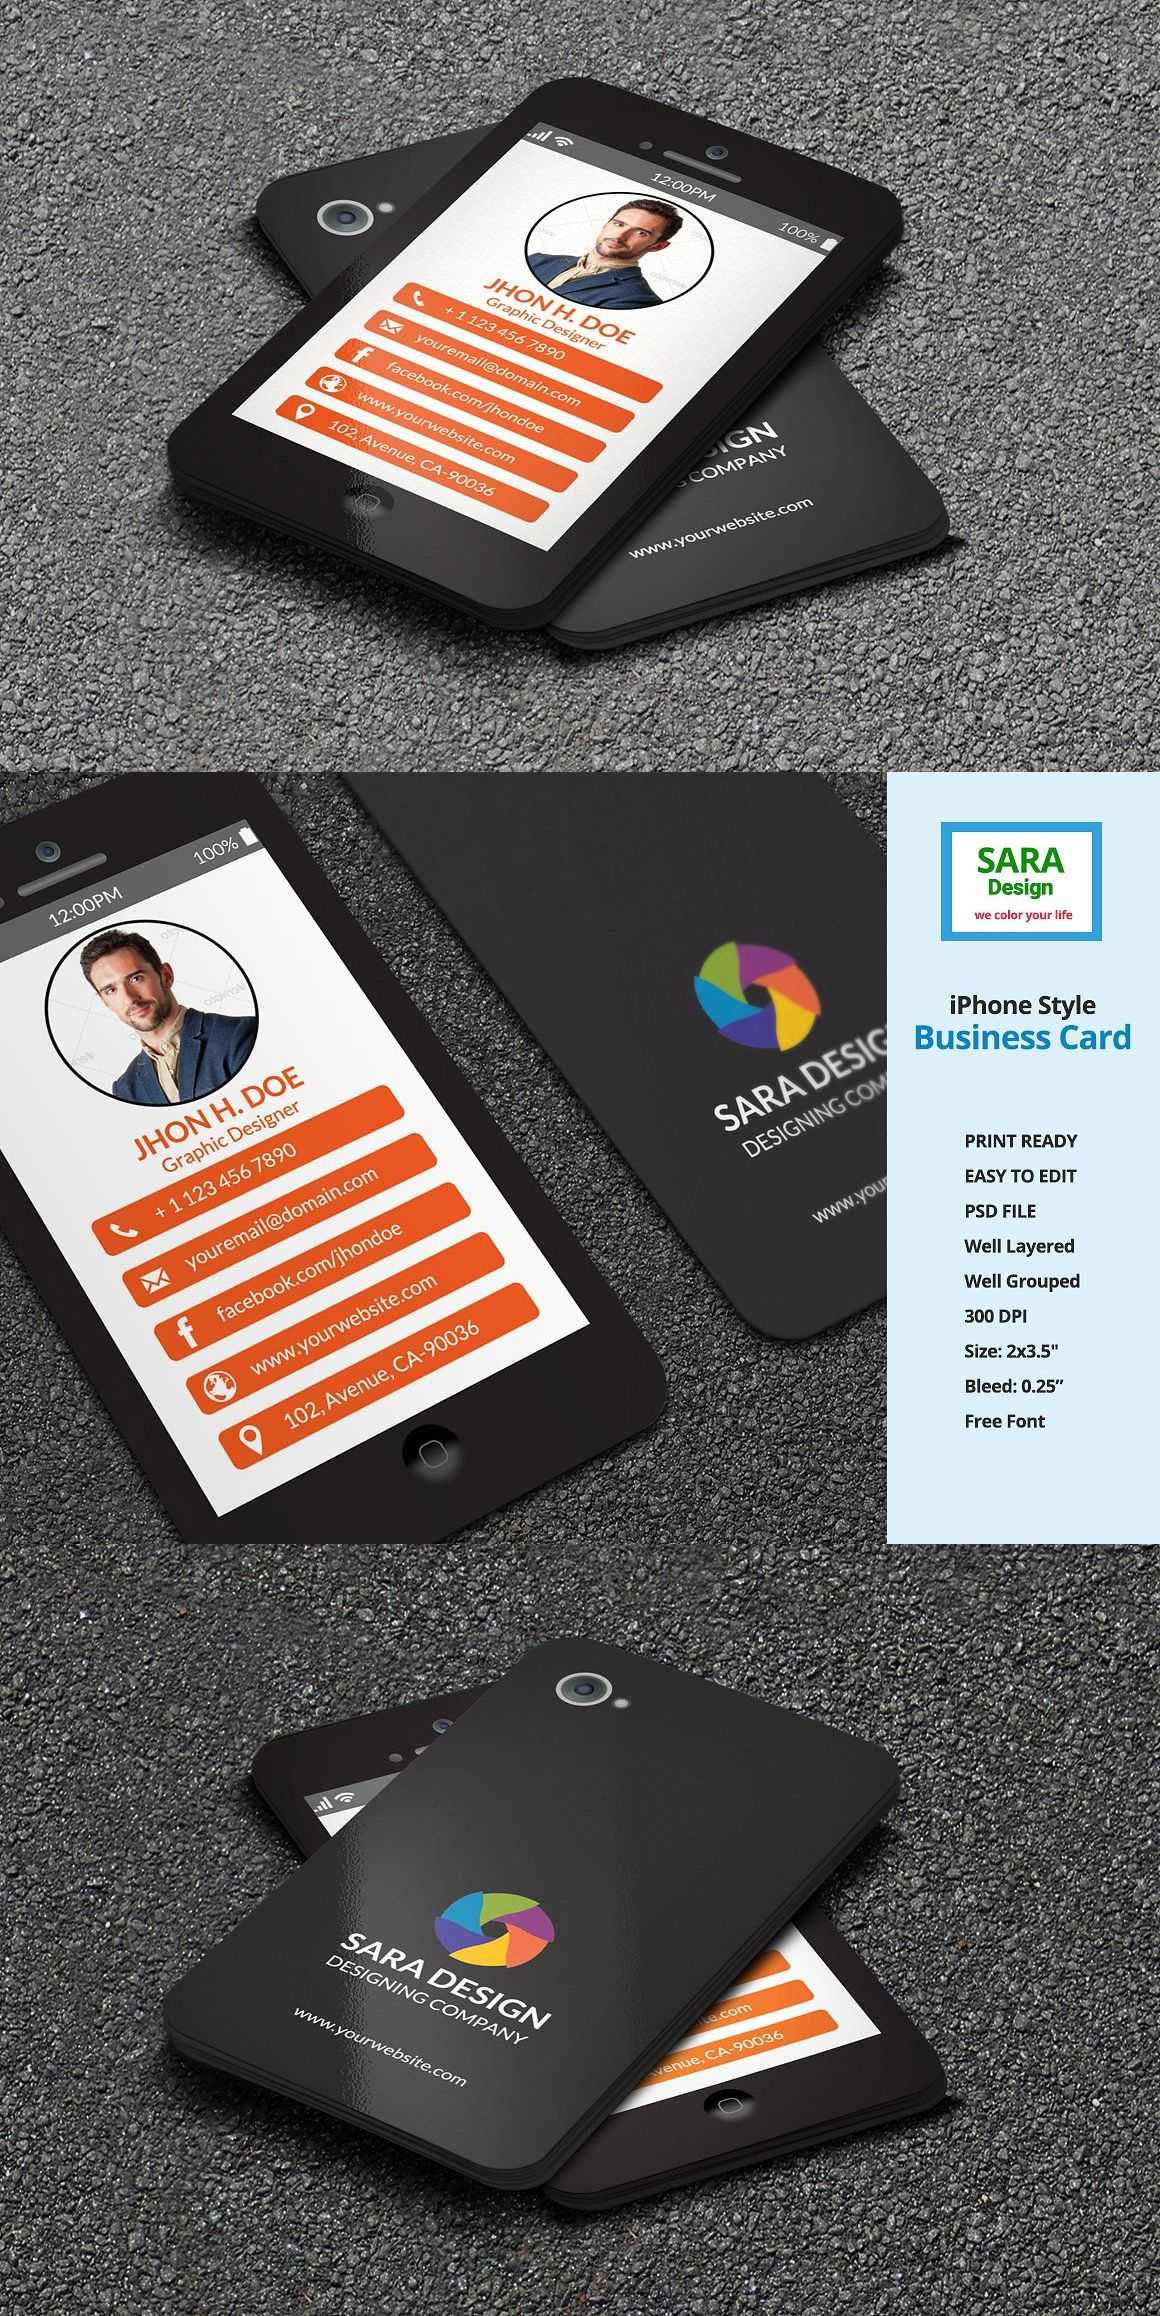 Iphone Stylish Business Card Templates Psd | Business Card Throughout Iphone Business Card Template